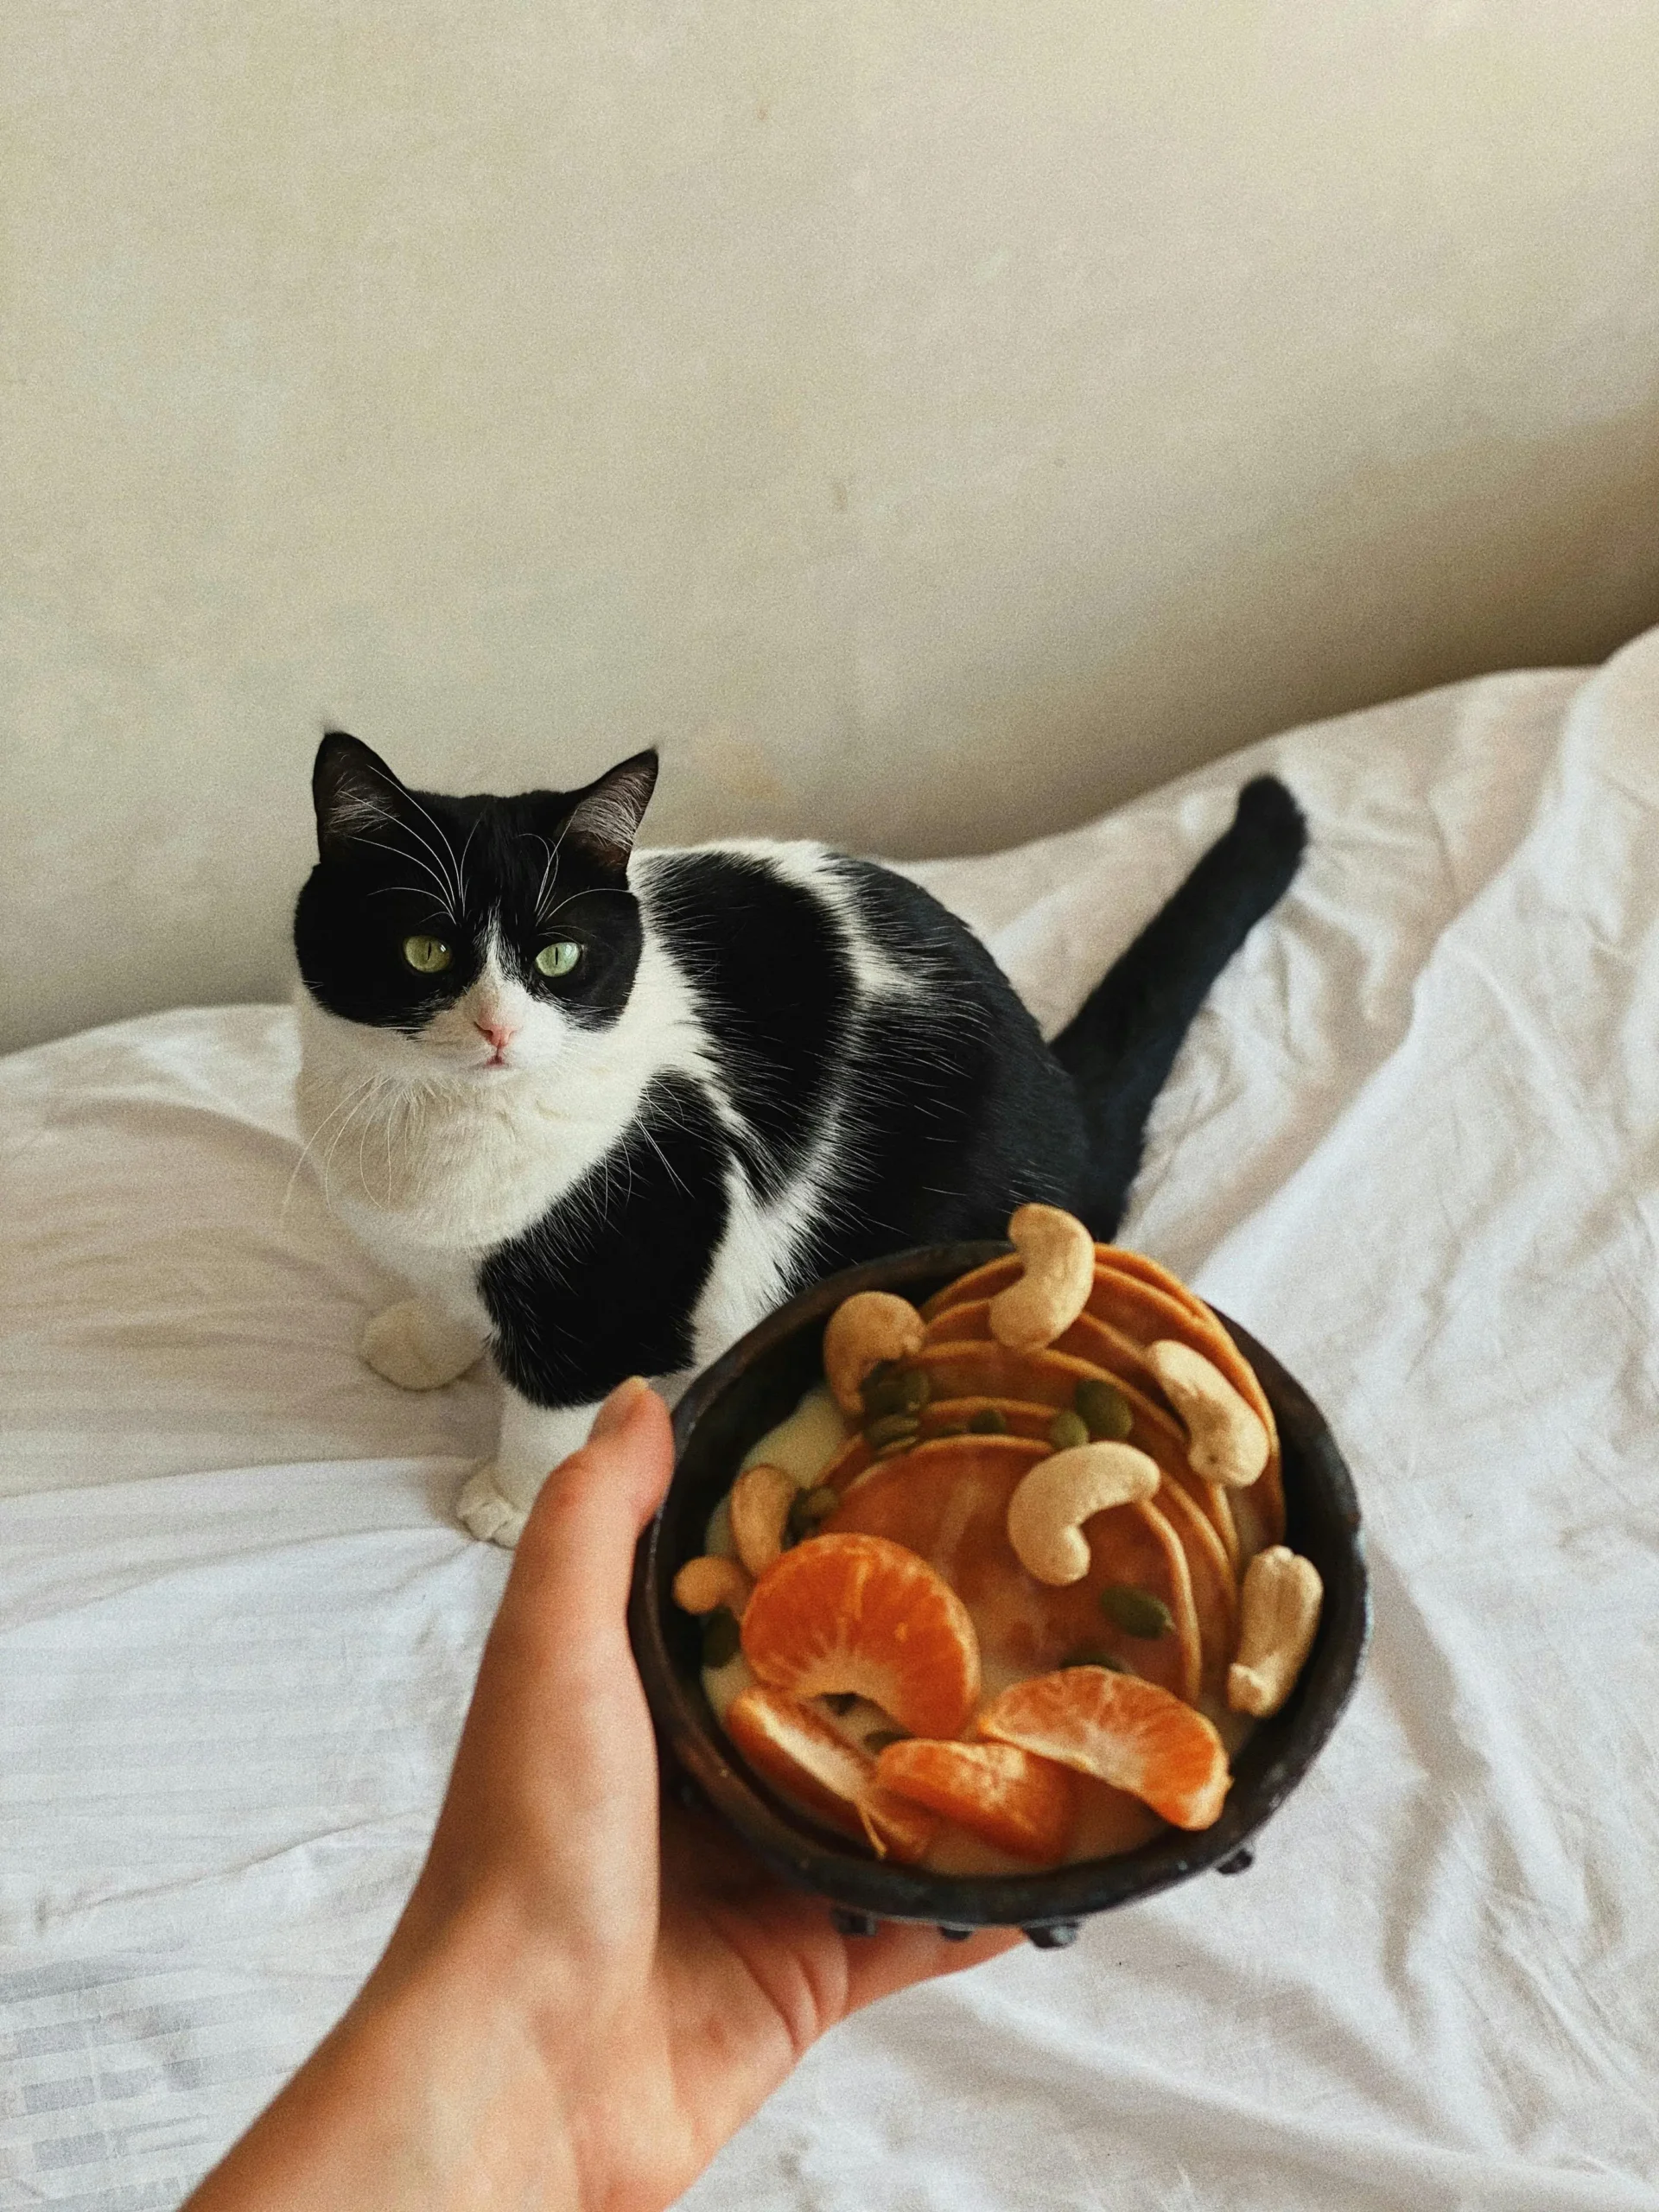 Can cats eat cashews